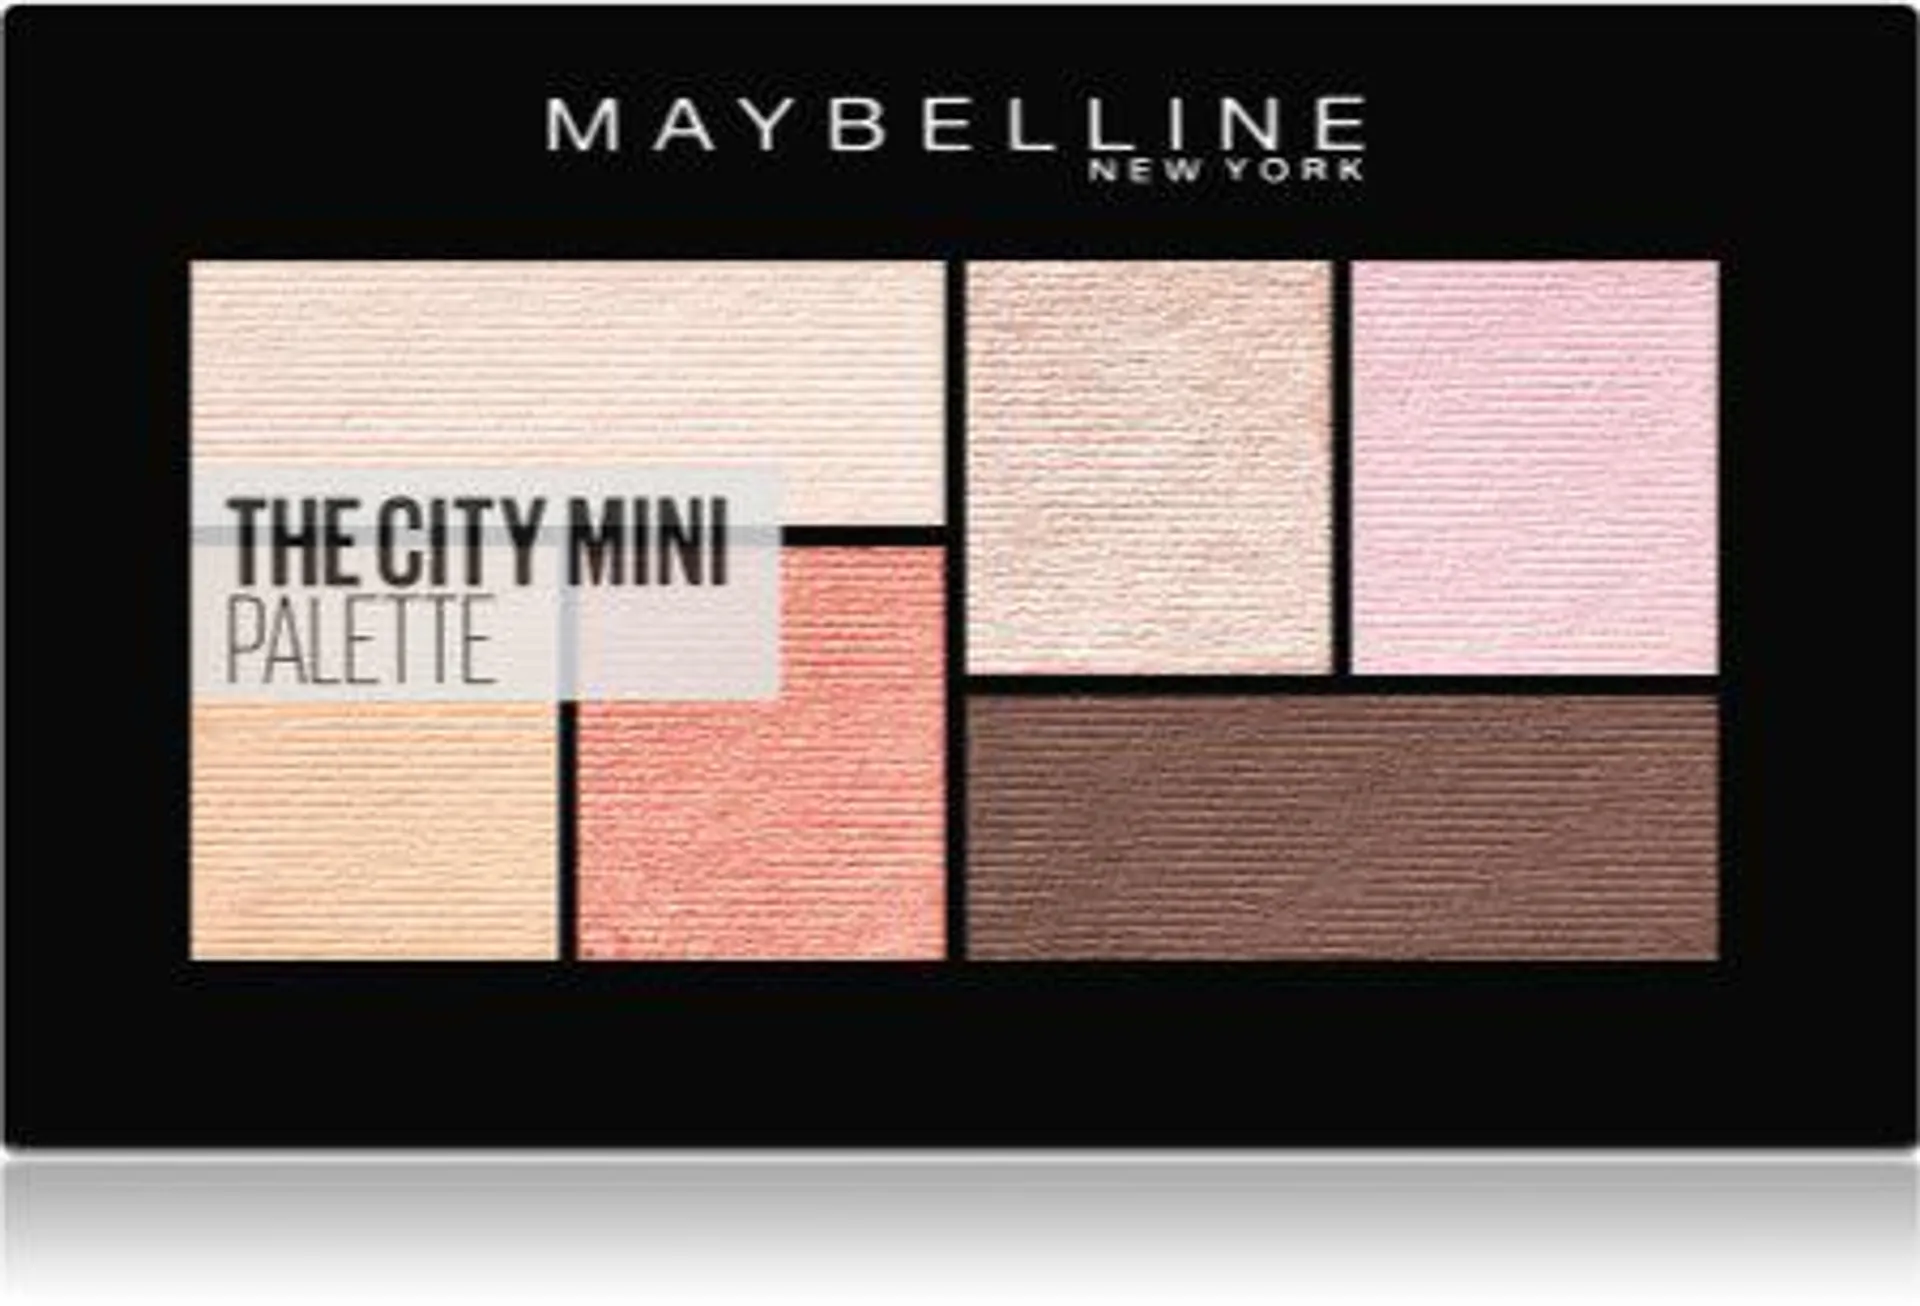 The City Mini Palette